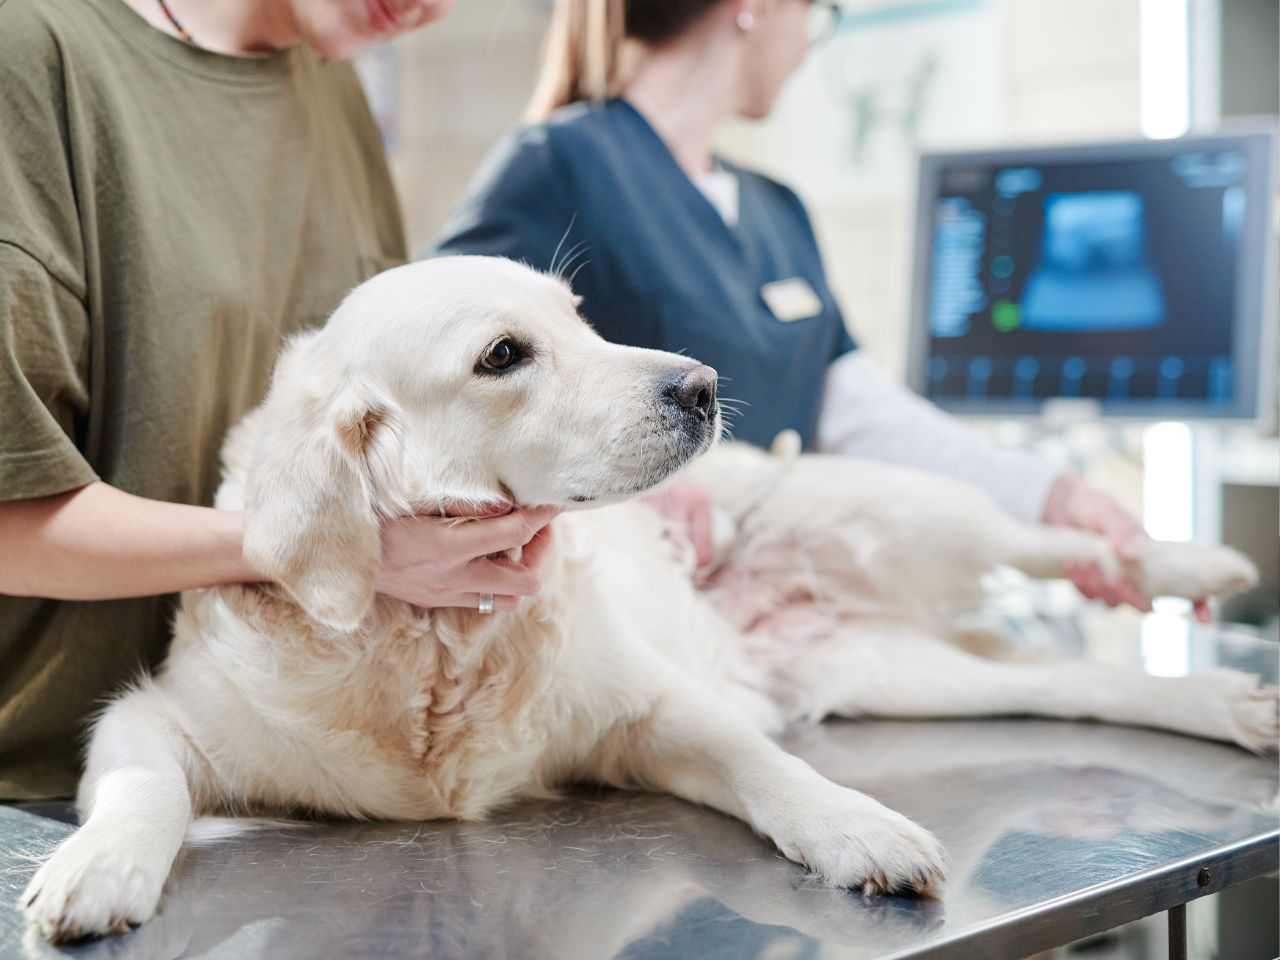 Vets using ultrasound to examine dog